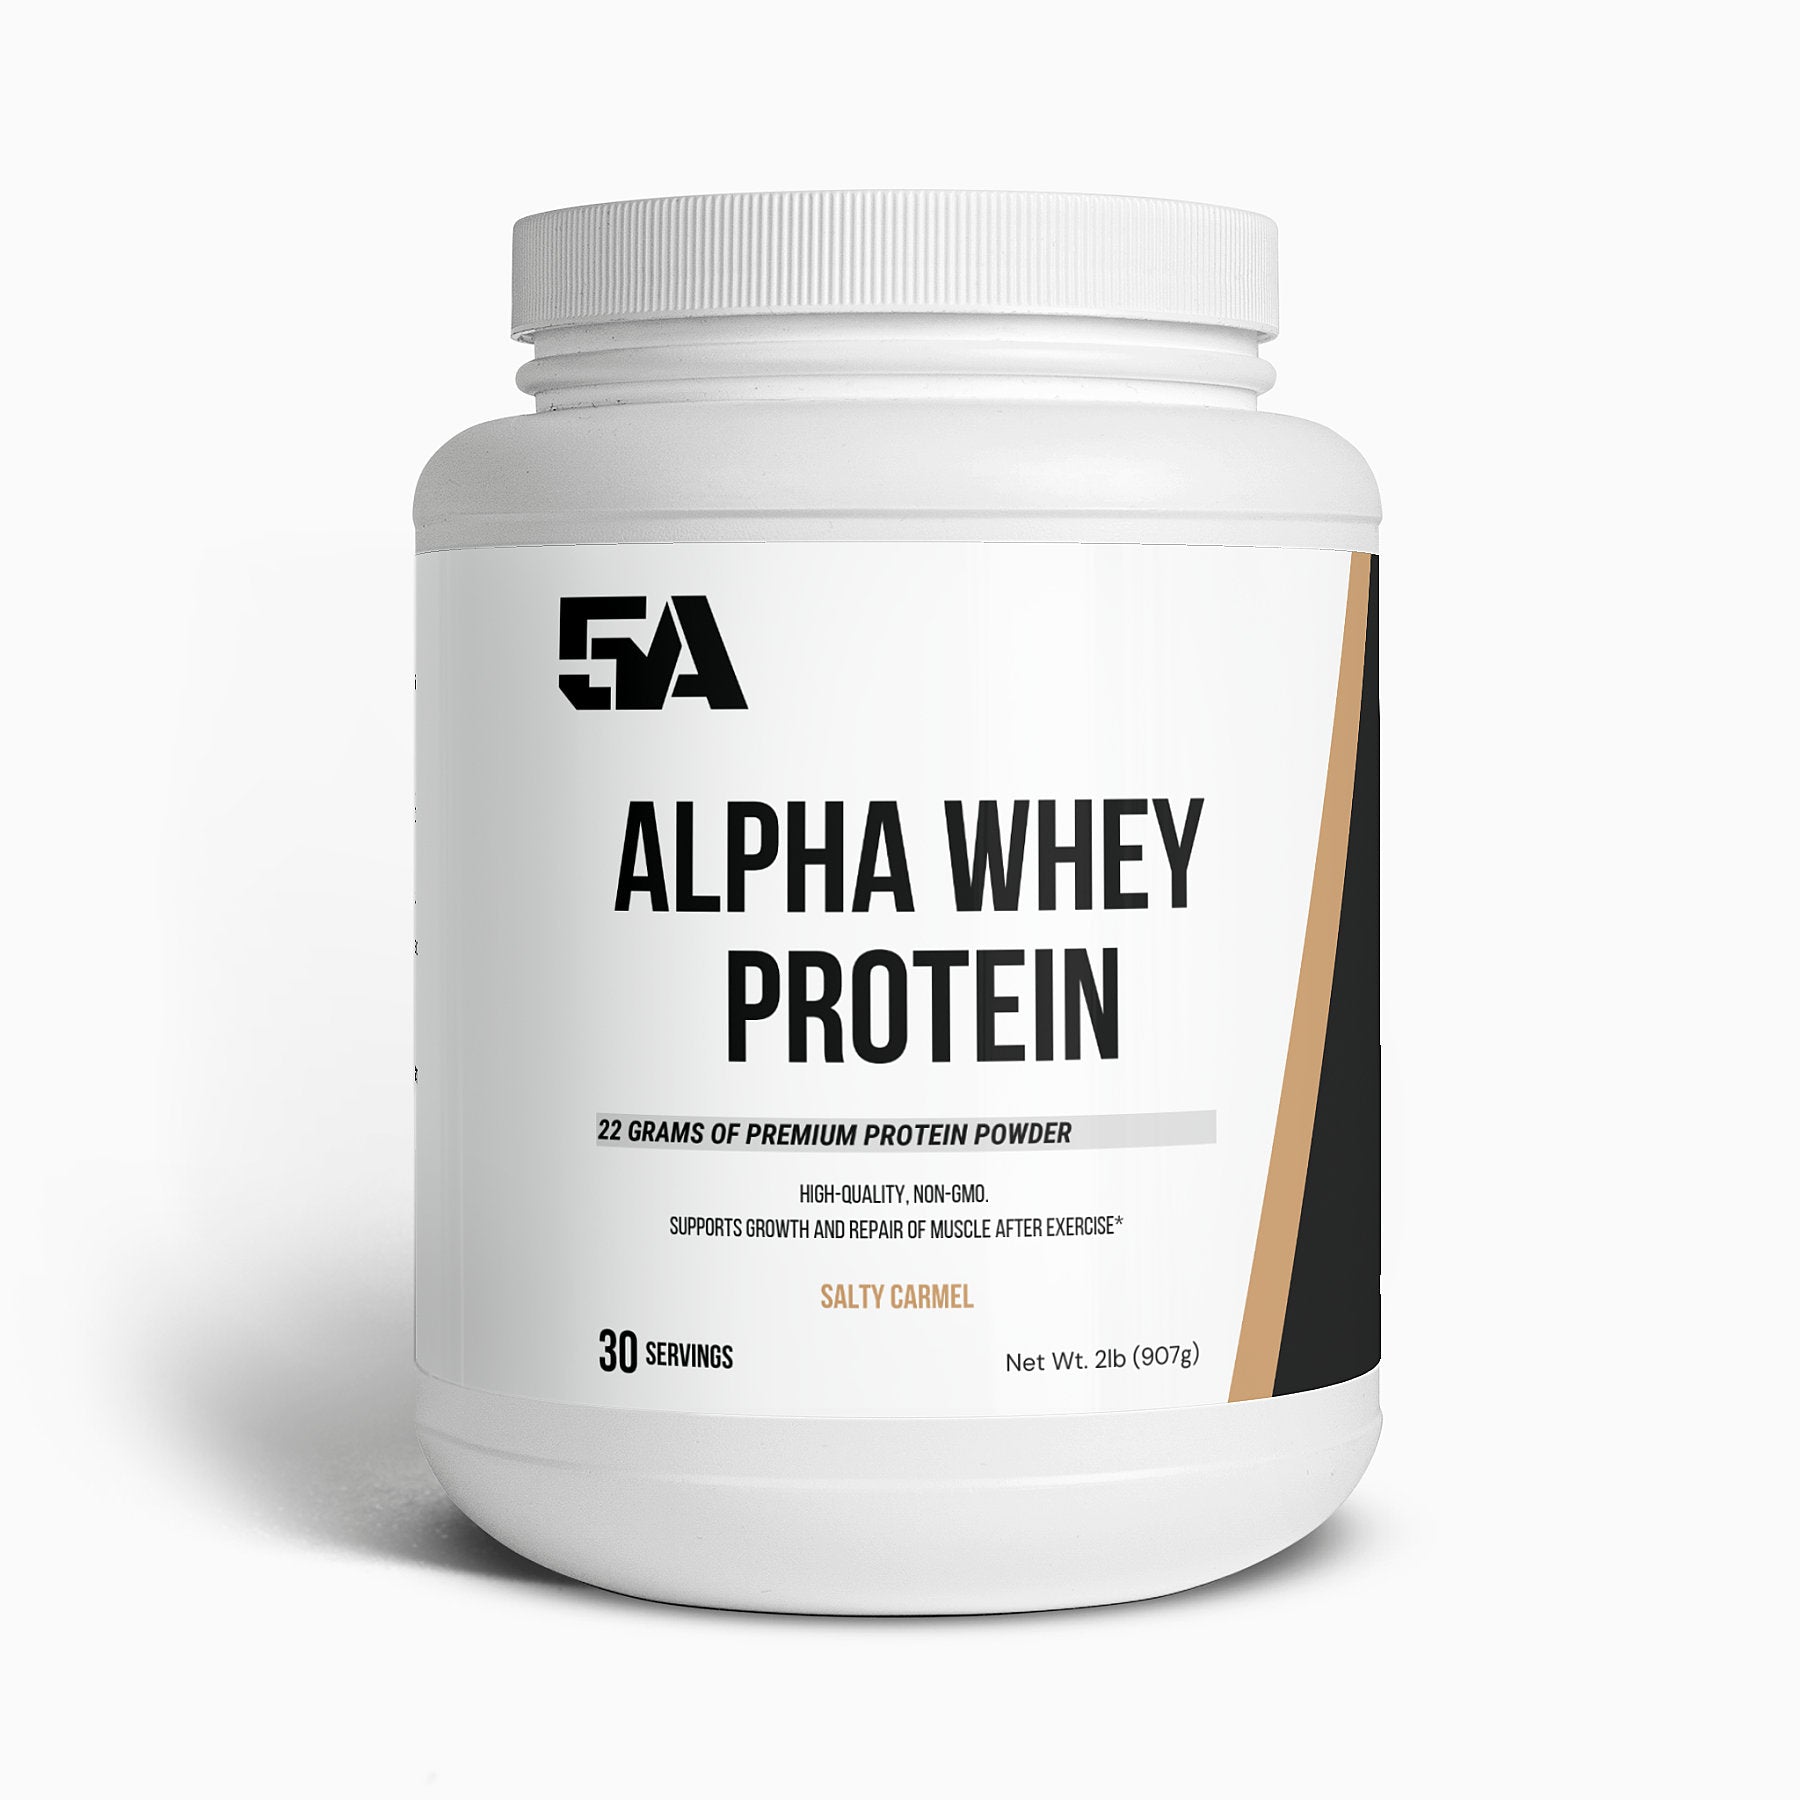 ALPHA Whey Protein